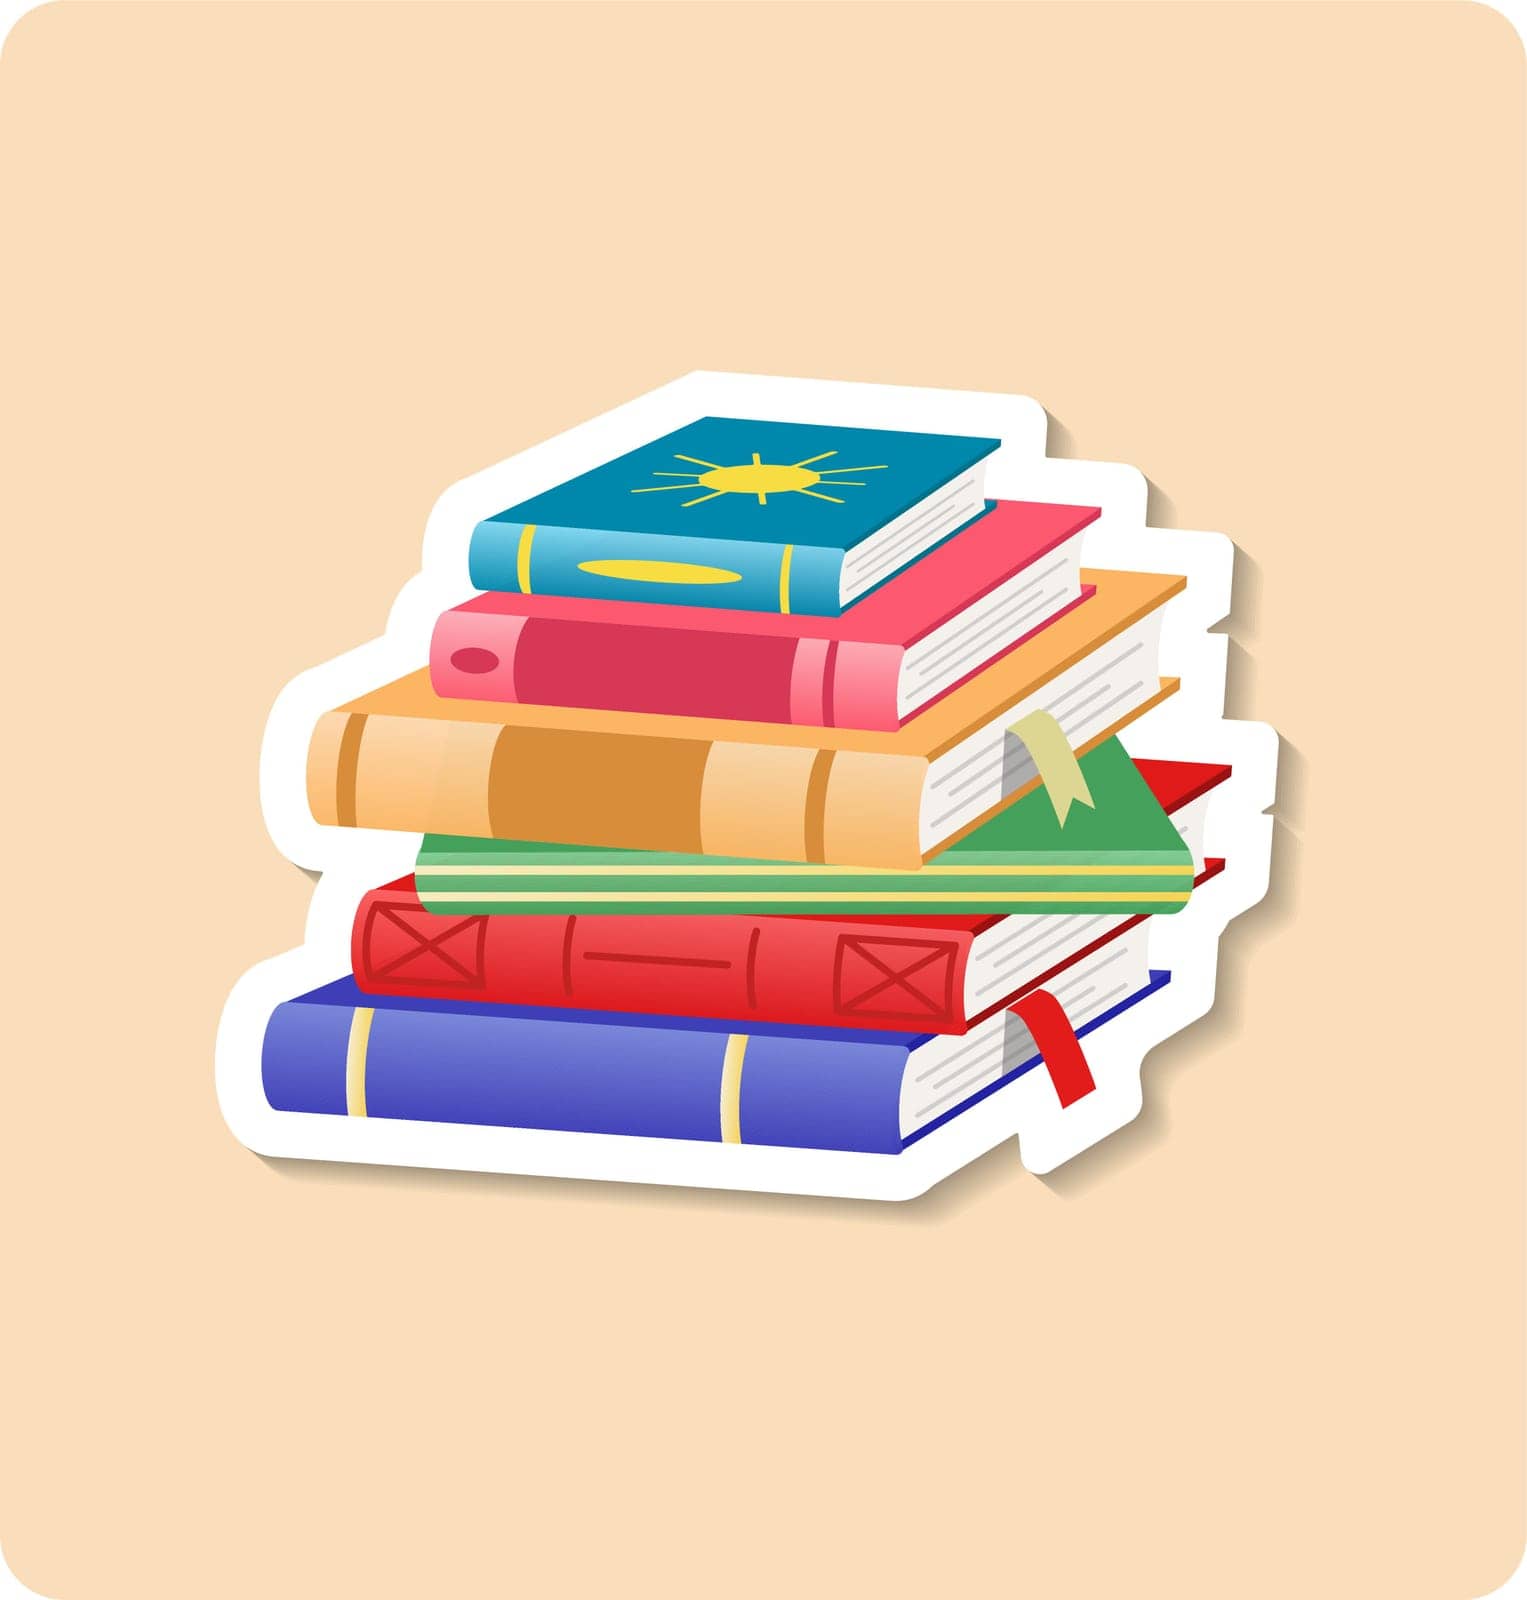 Books sticker illustration. Book, stack, bookmark, variety. Vector graphics.